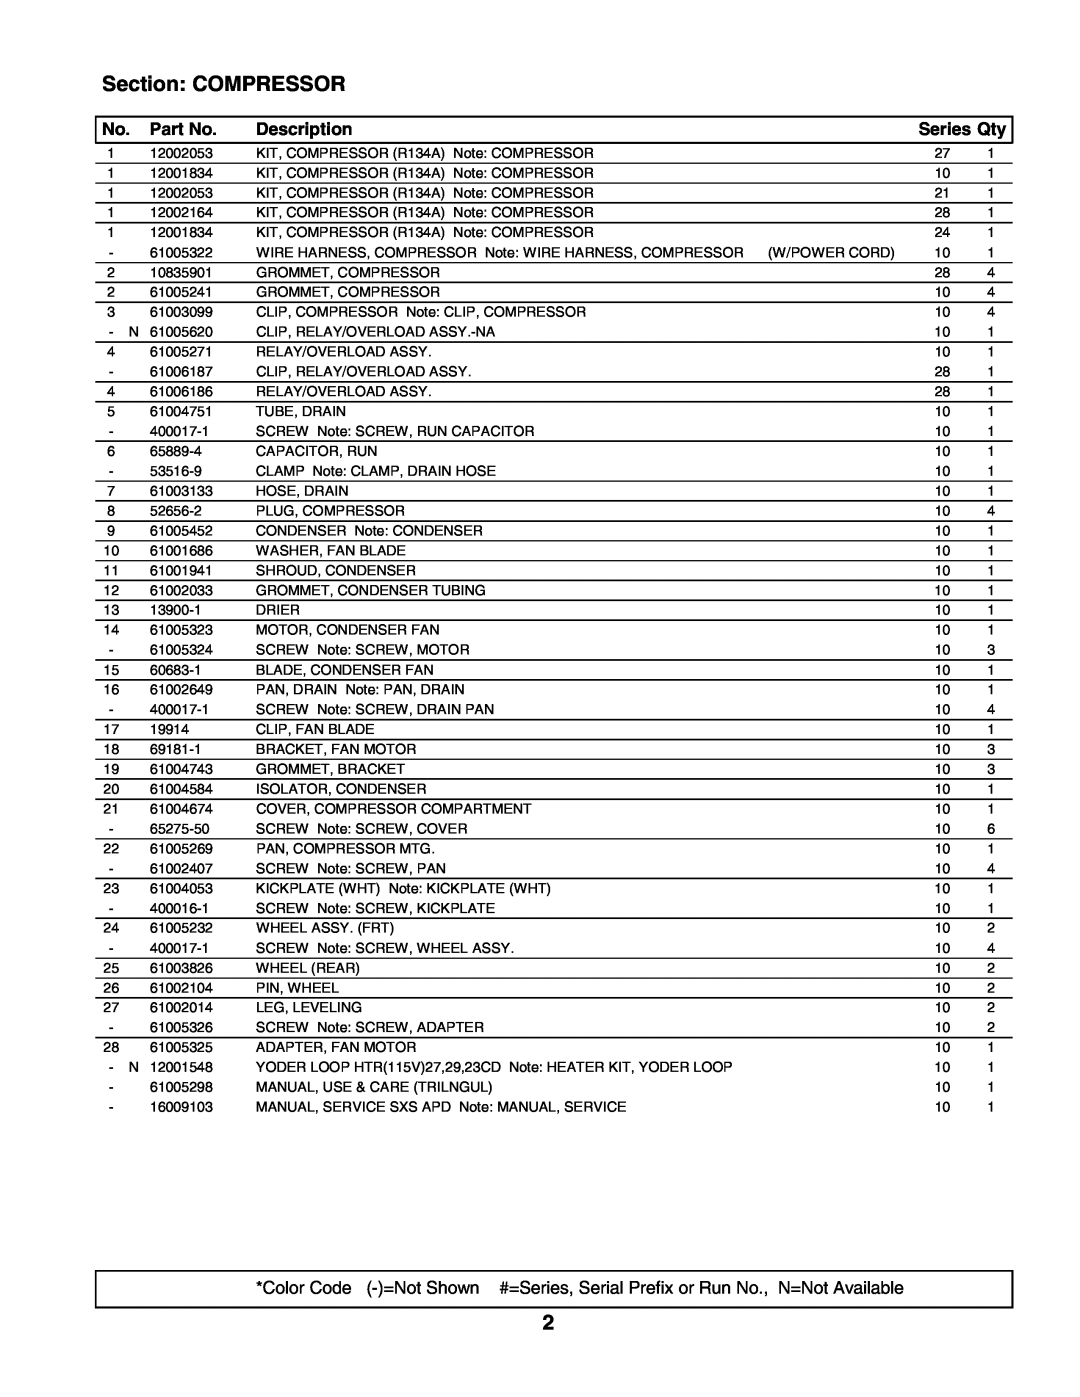 Maytag MSD2756GEW manual Section COMPRESSOR, Description, Series Qty 